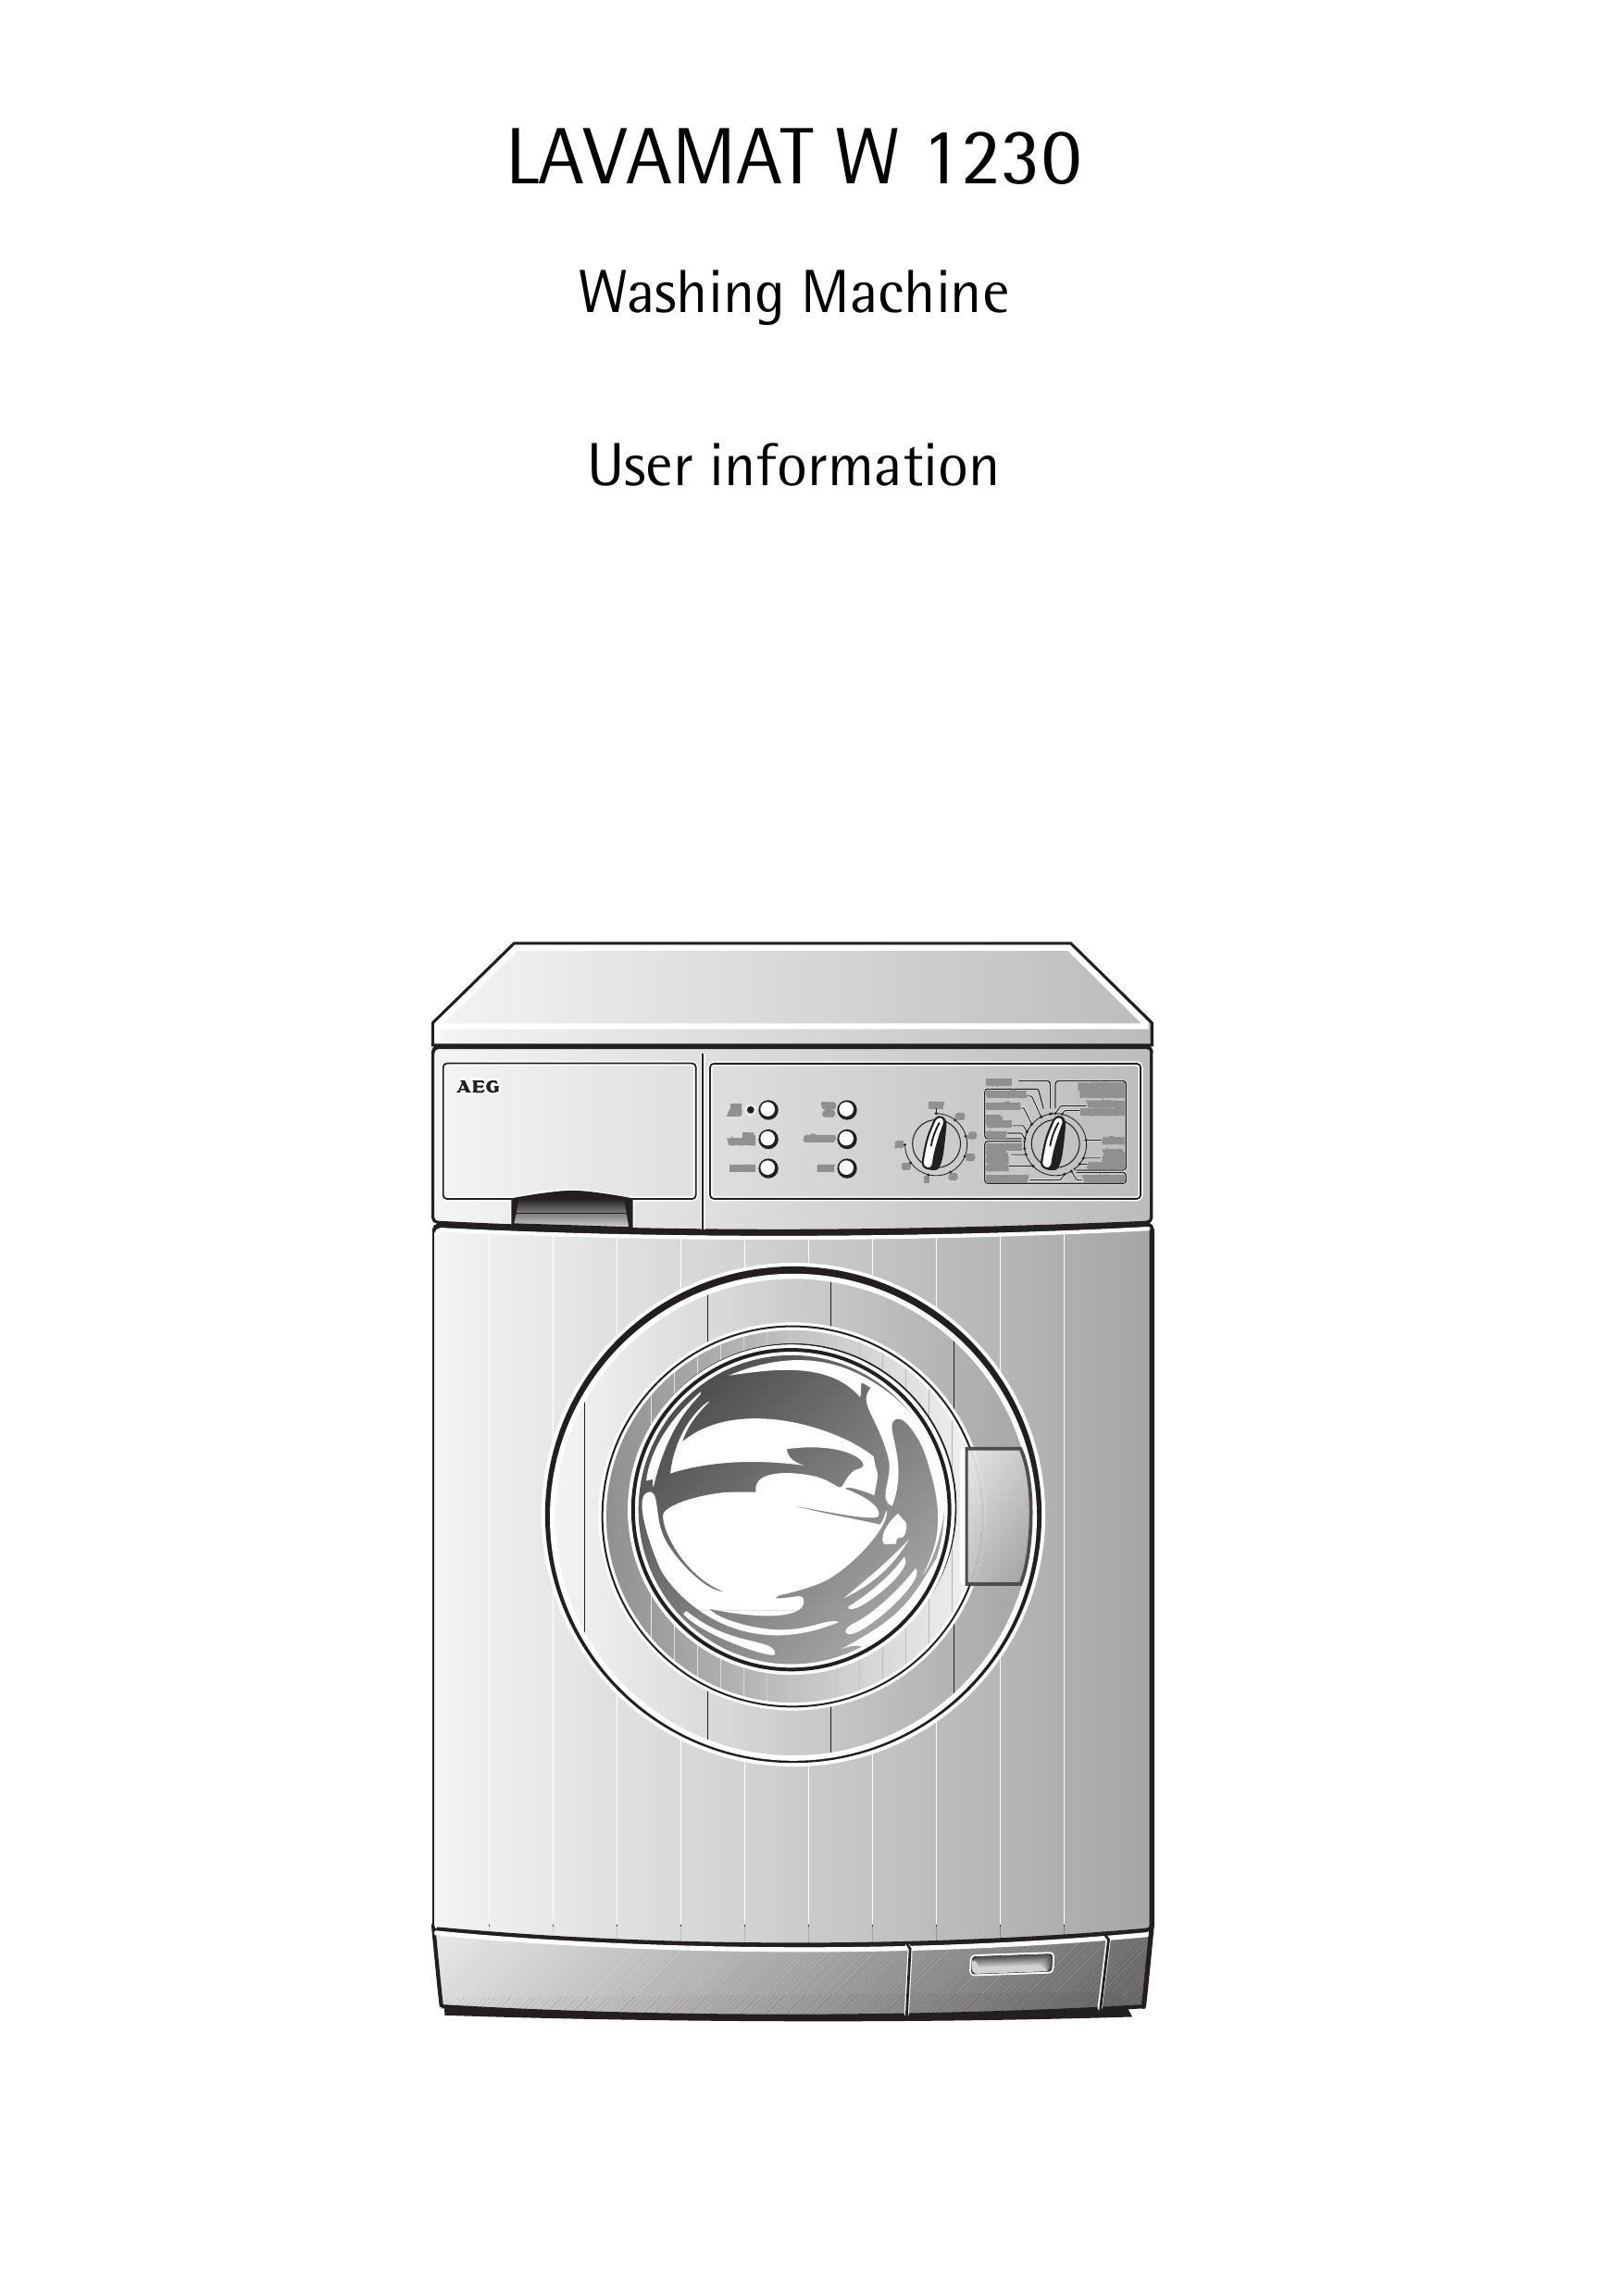 AEG W 1230 Washer/Dryer User Manual